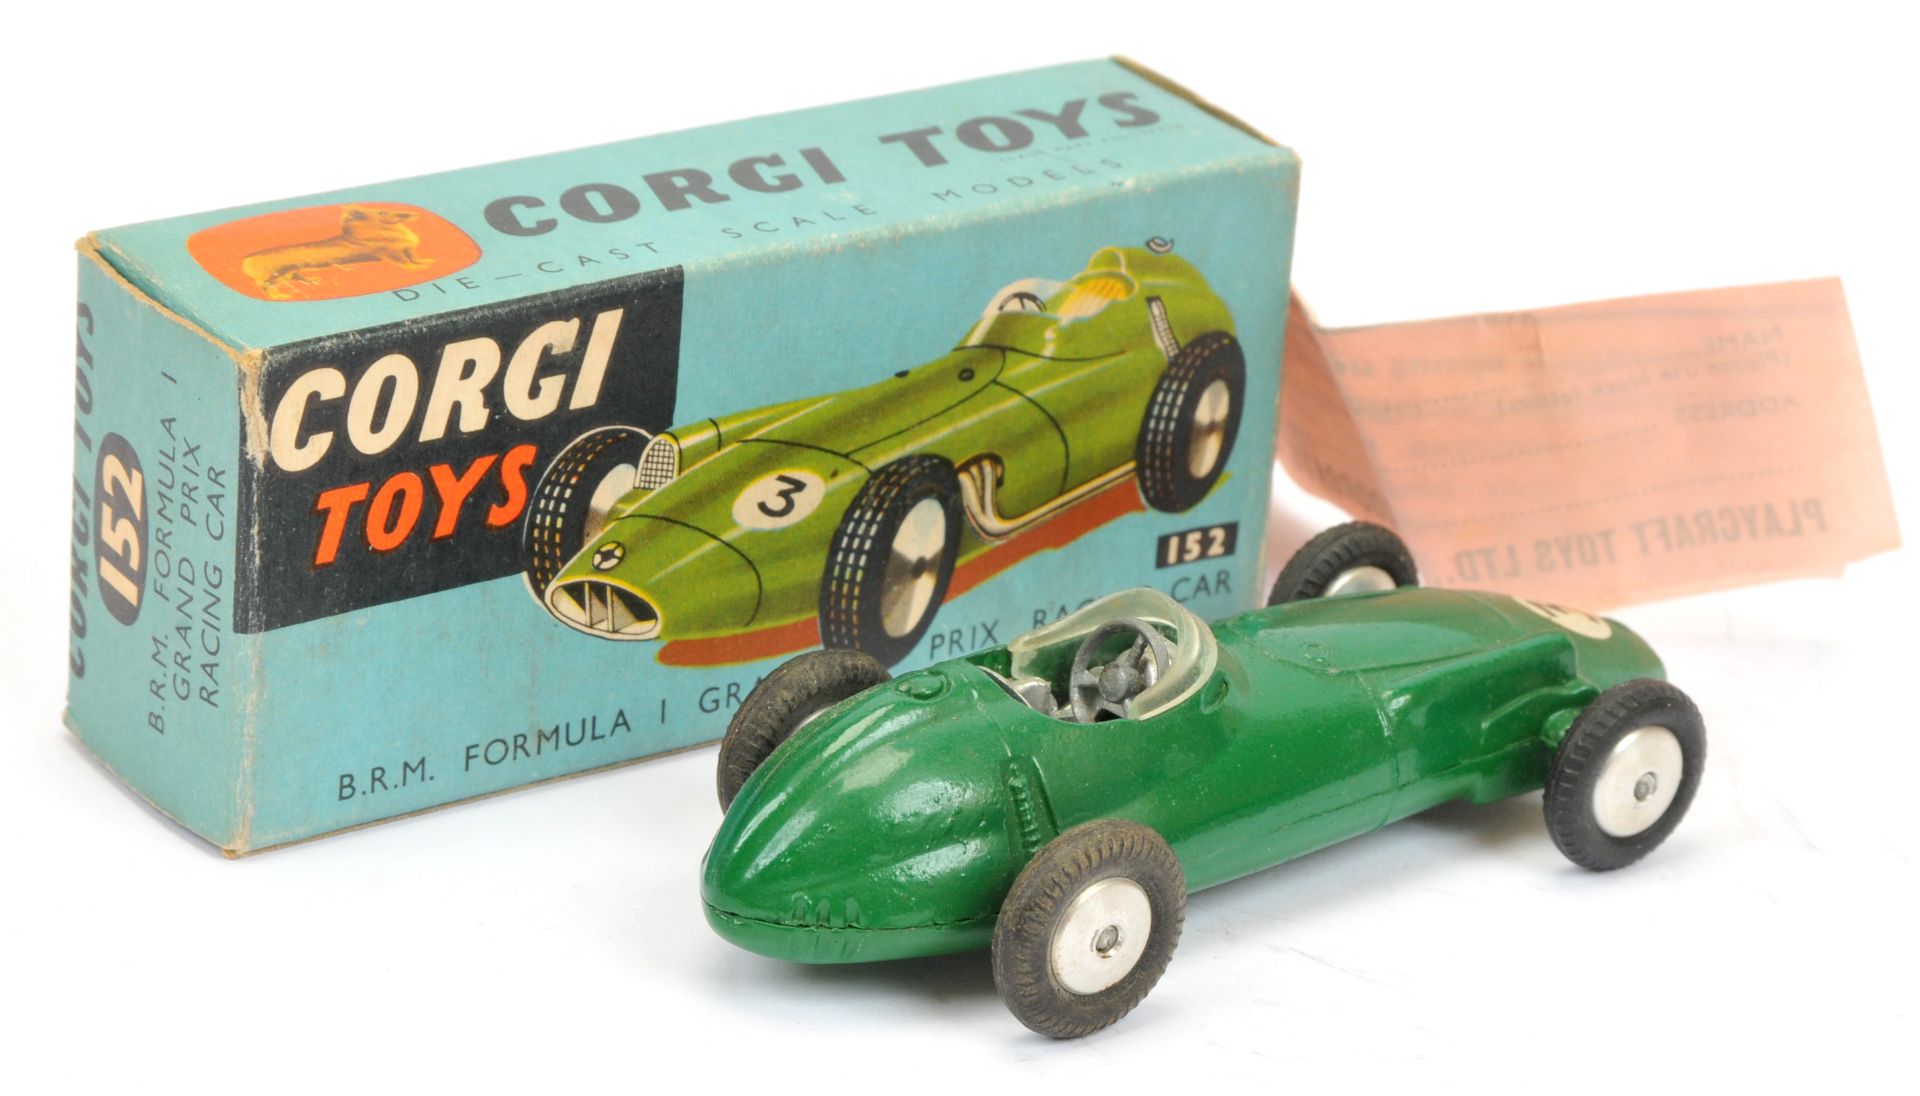 Corgi Toys 152 BRM Formula 1 "Grand Prix" Racing car - dark green, silver interior and trim - Image 2 of 2